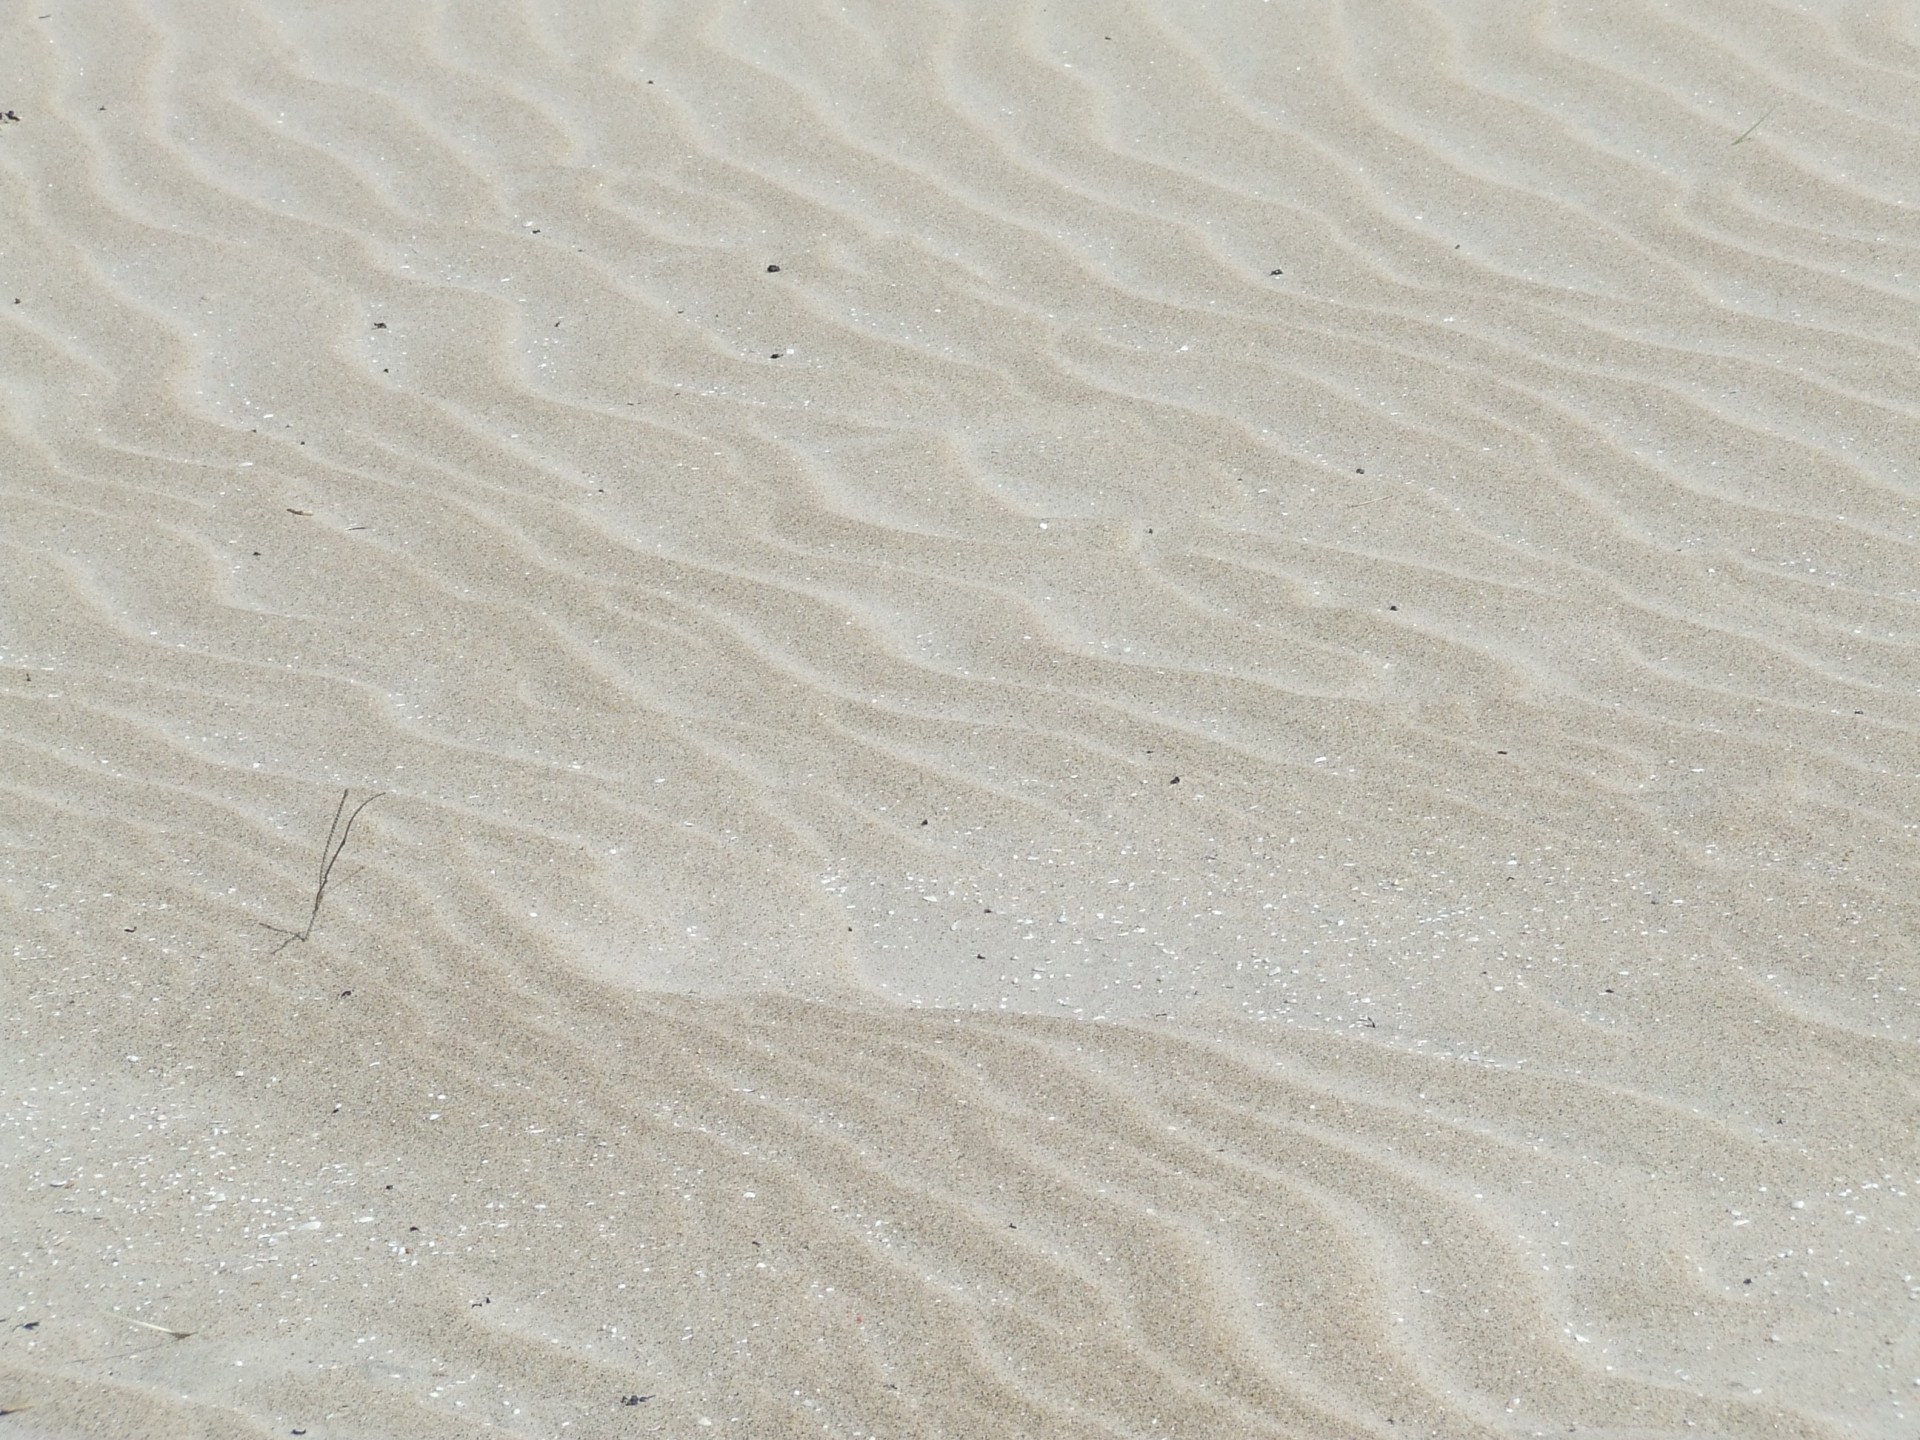 Sand Texture